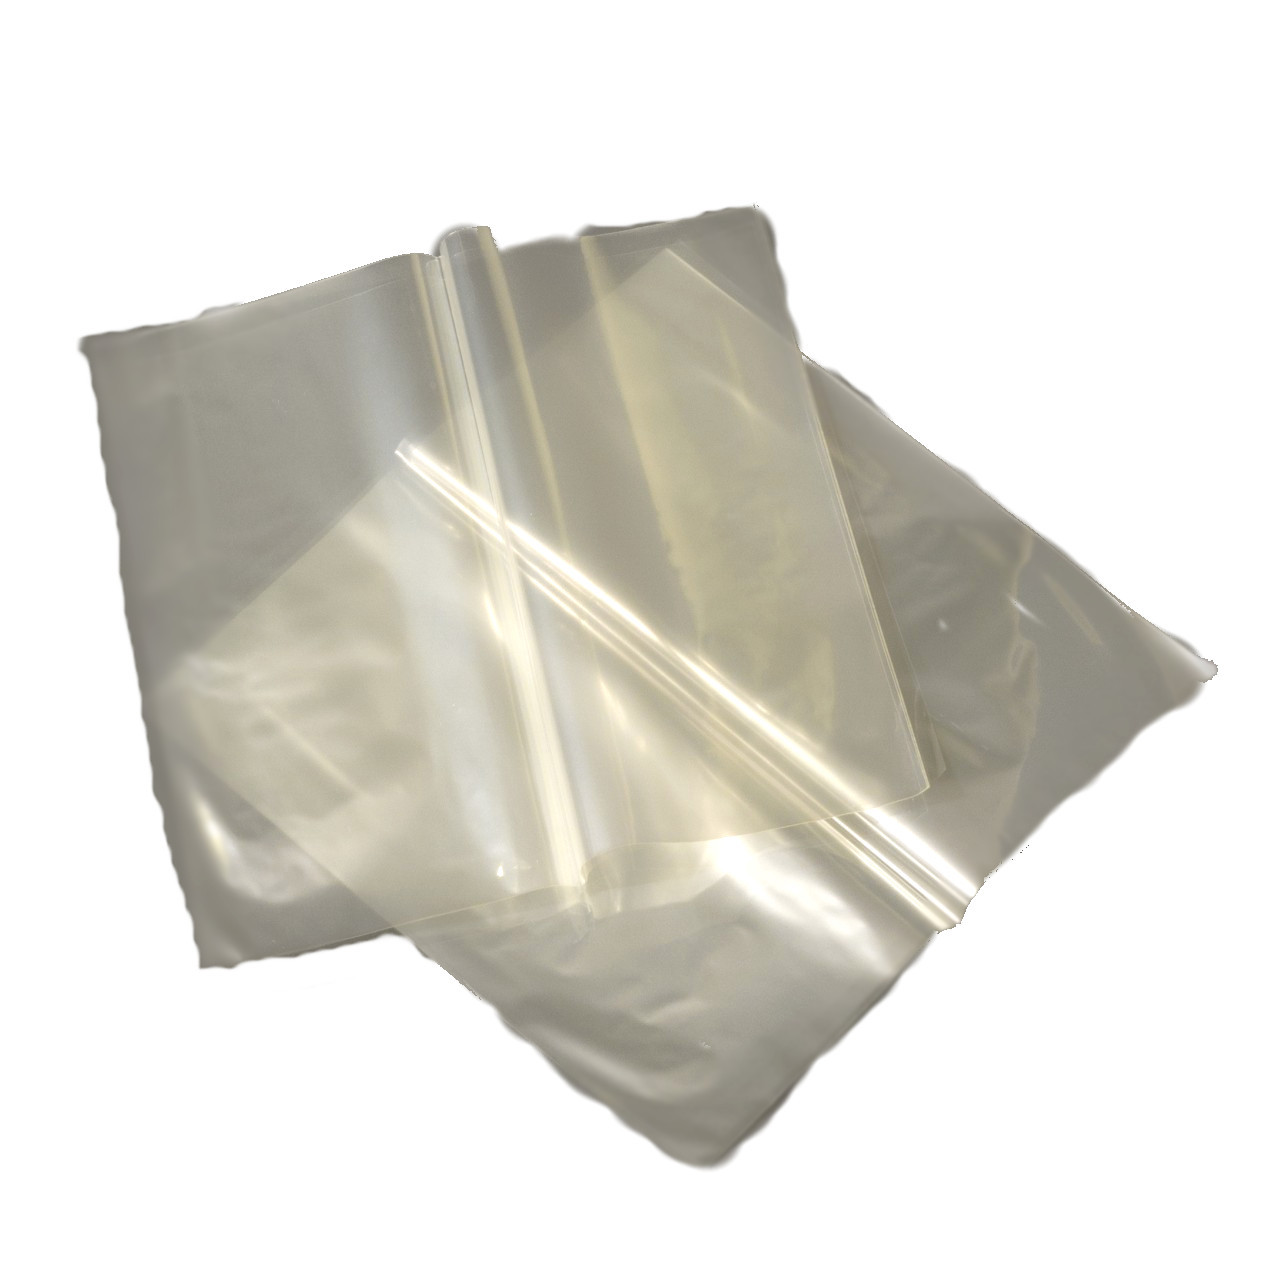 Clear PP Plastic Cello Bags, Wholesale